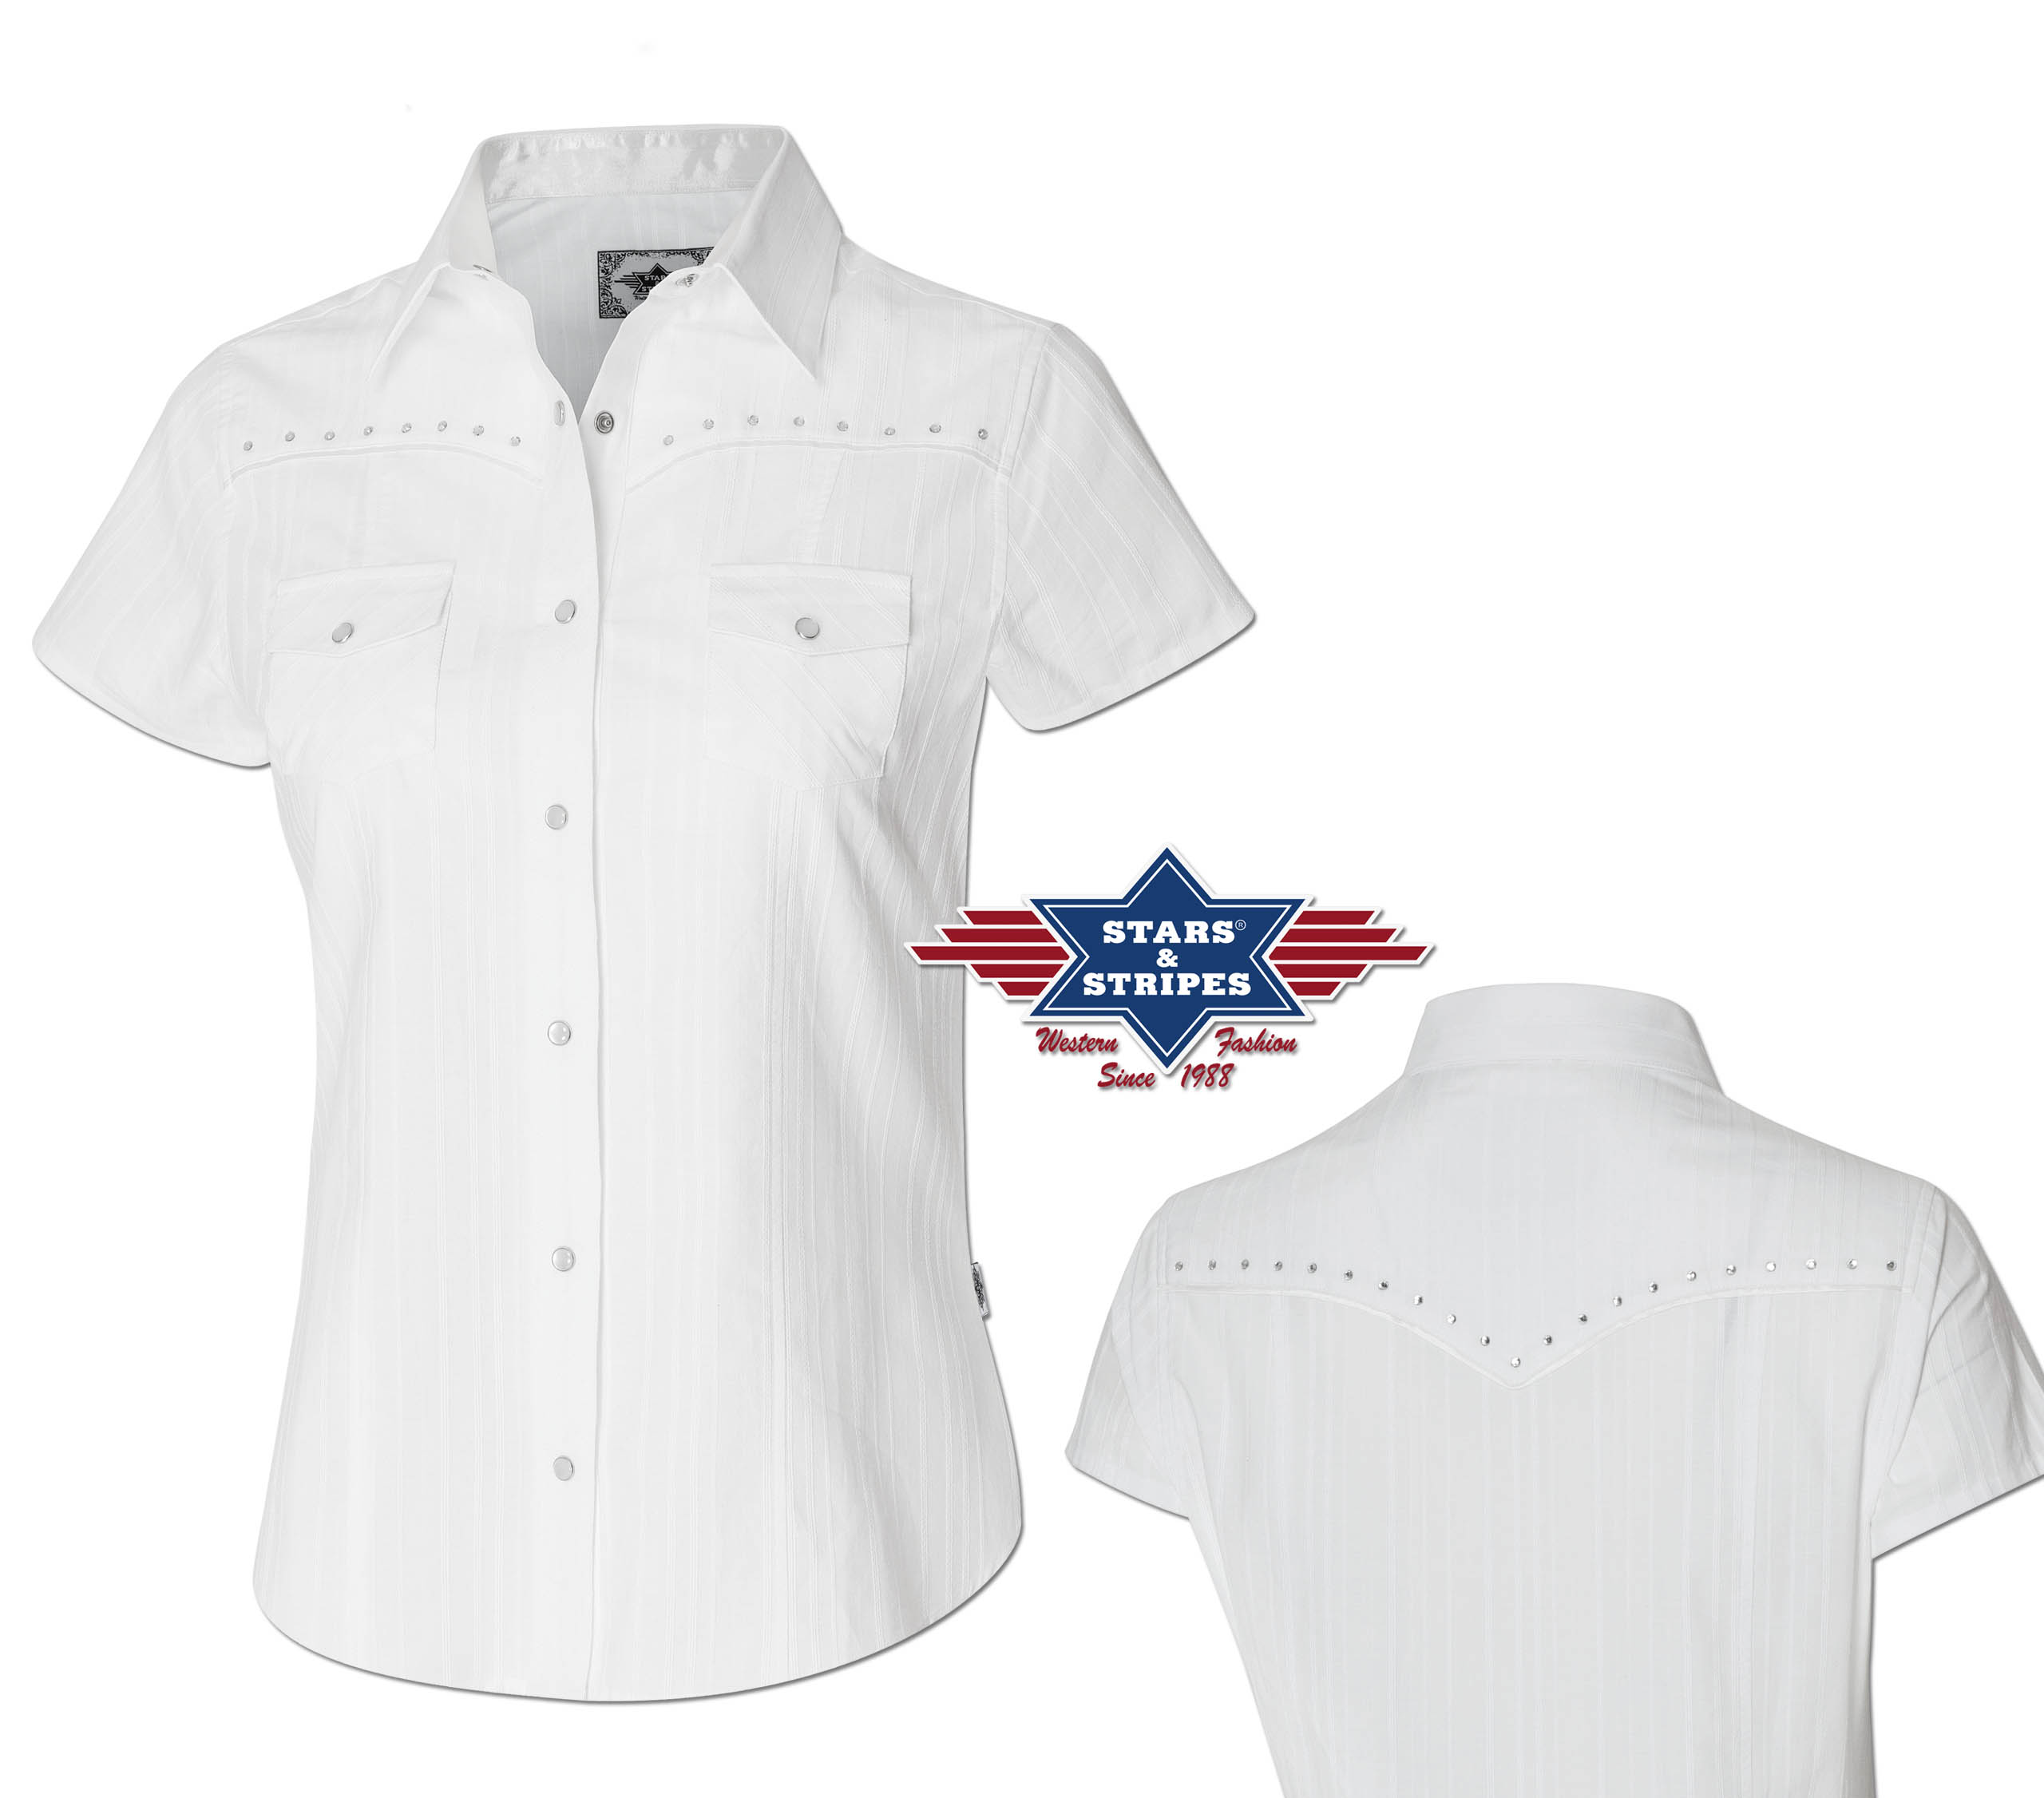 Cowboy skjorte dame hvit Amelie Str S-3Xl Pris 590-,